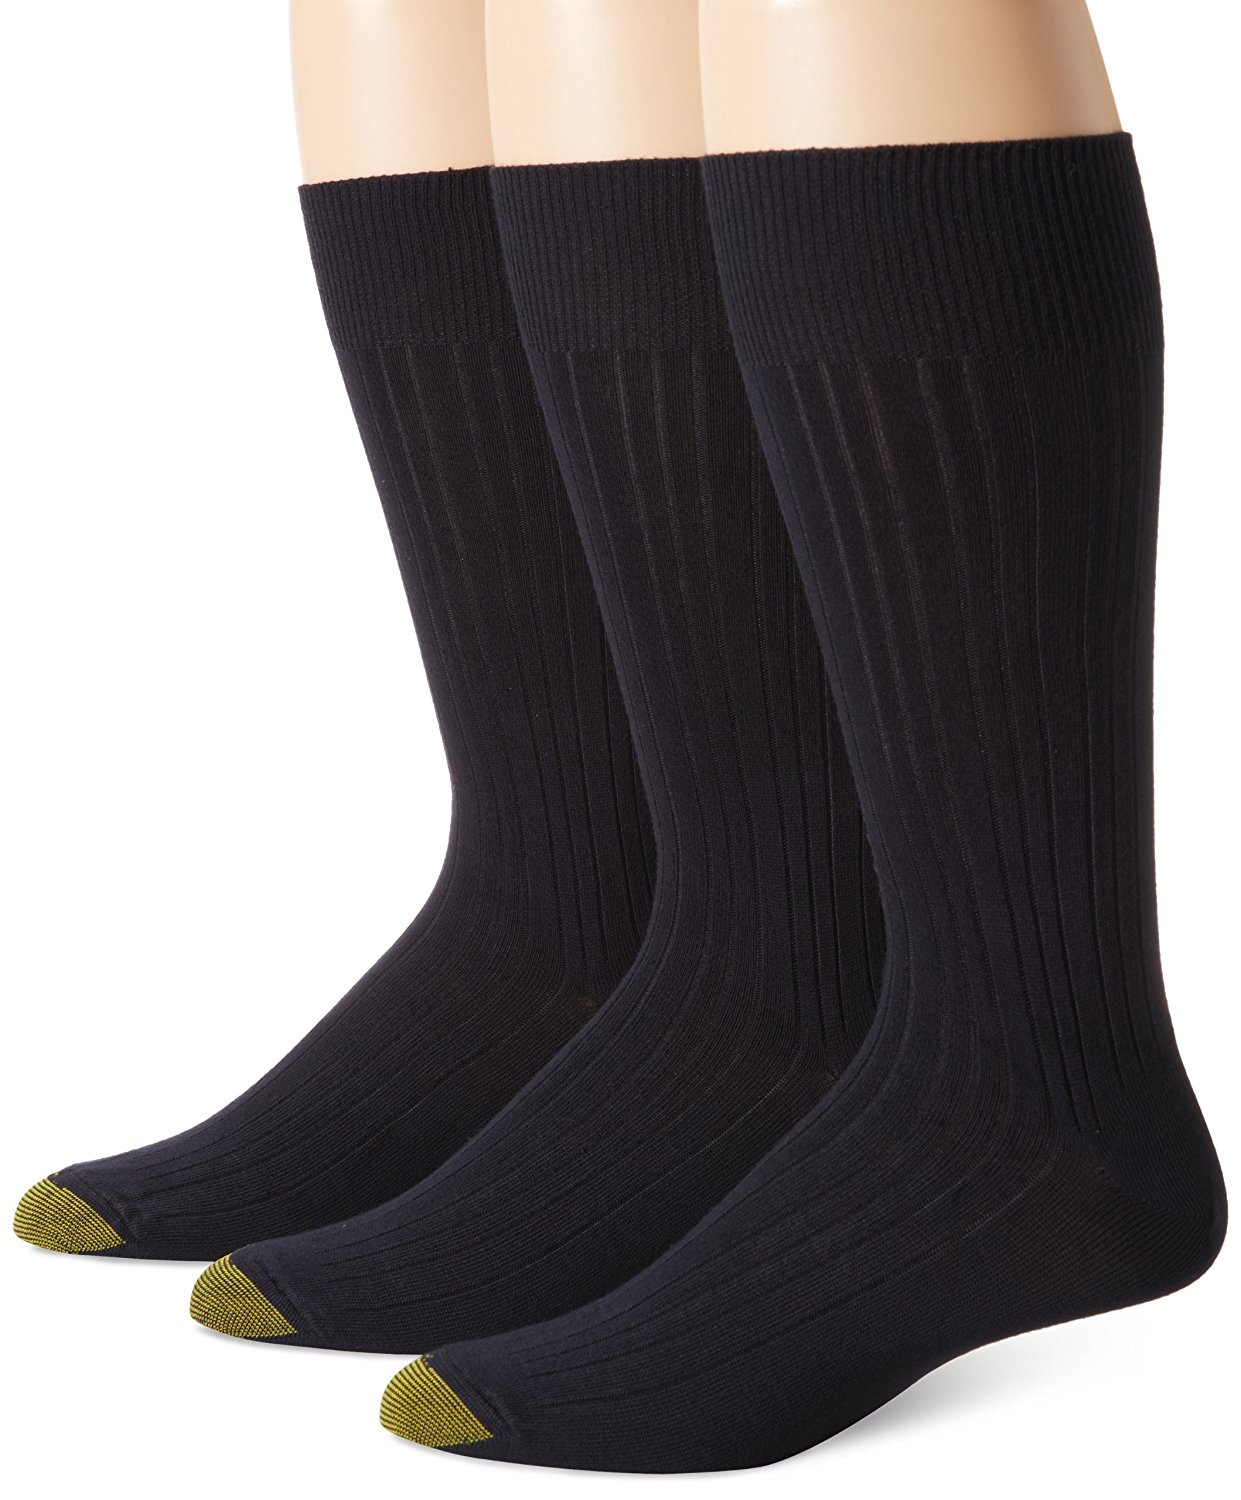 Thigh high socks reddit